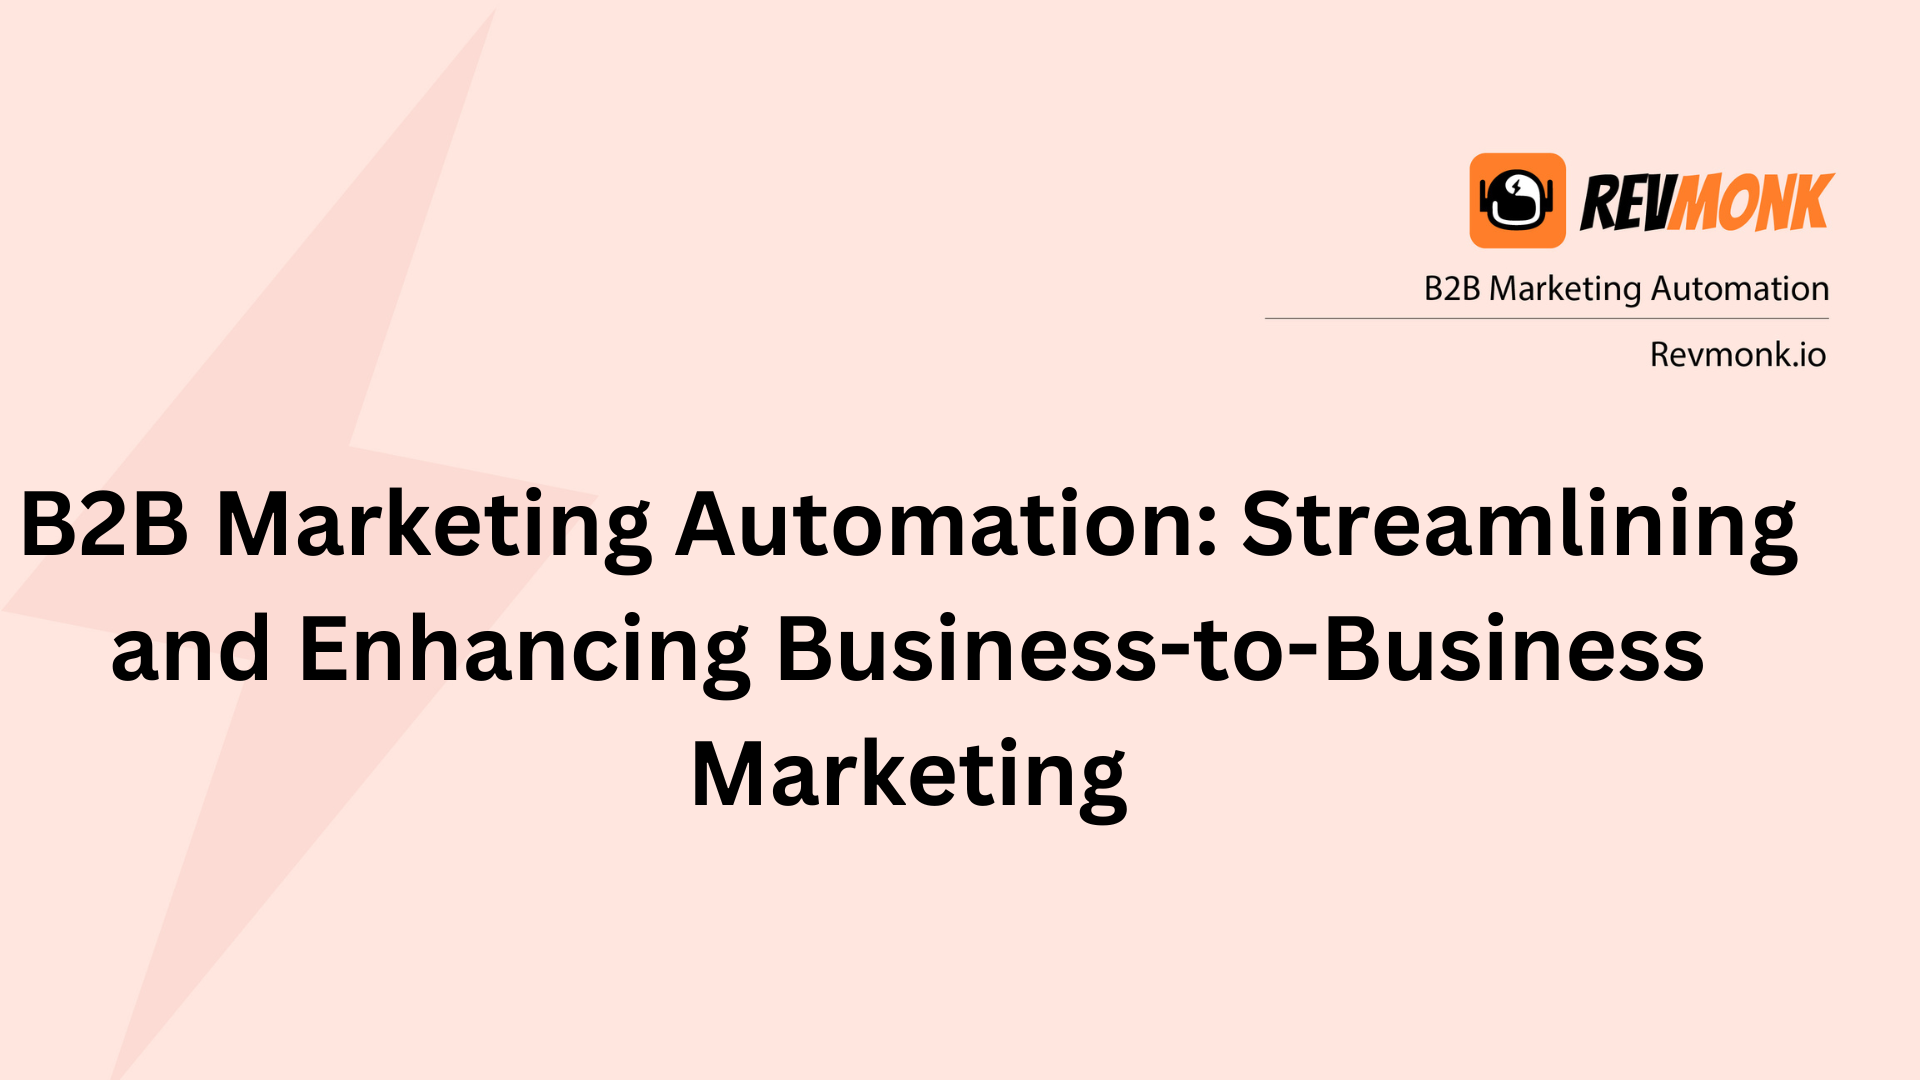 B2B Marketing Automation: Streamlining and Enhancing Business-to-Business Marketing